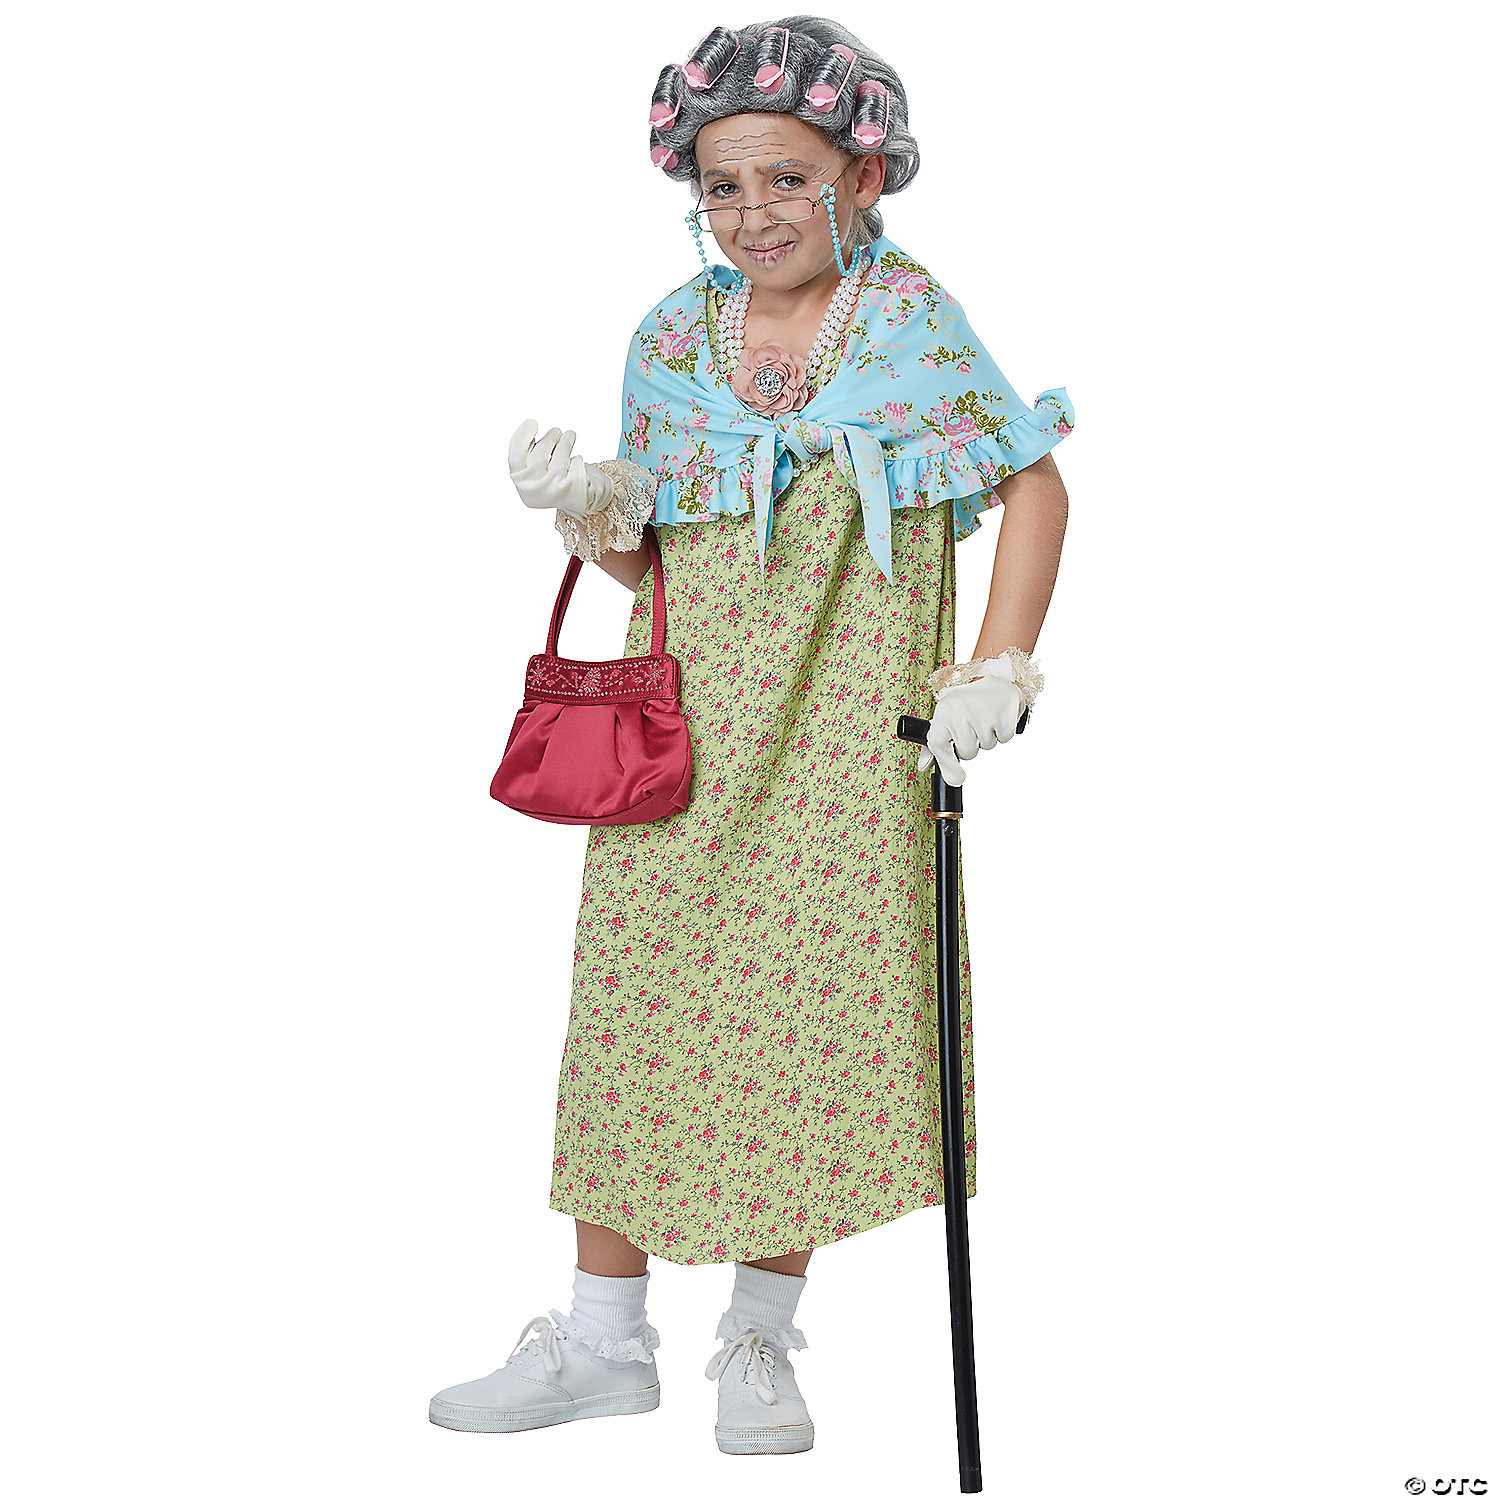 CHILD'S OLD LADY COSTUME KIT - HALLOWEEN